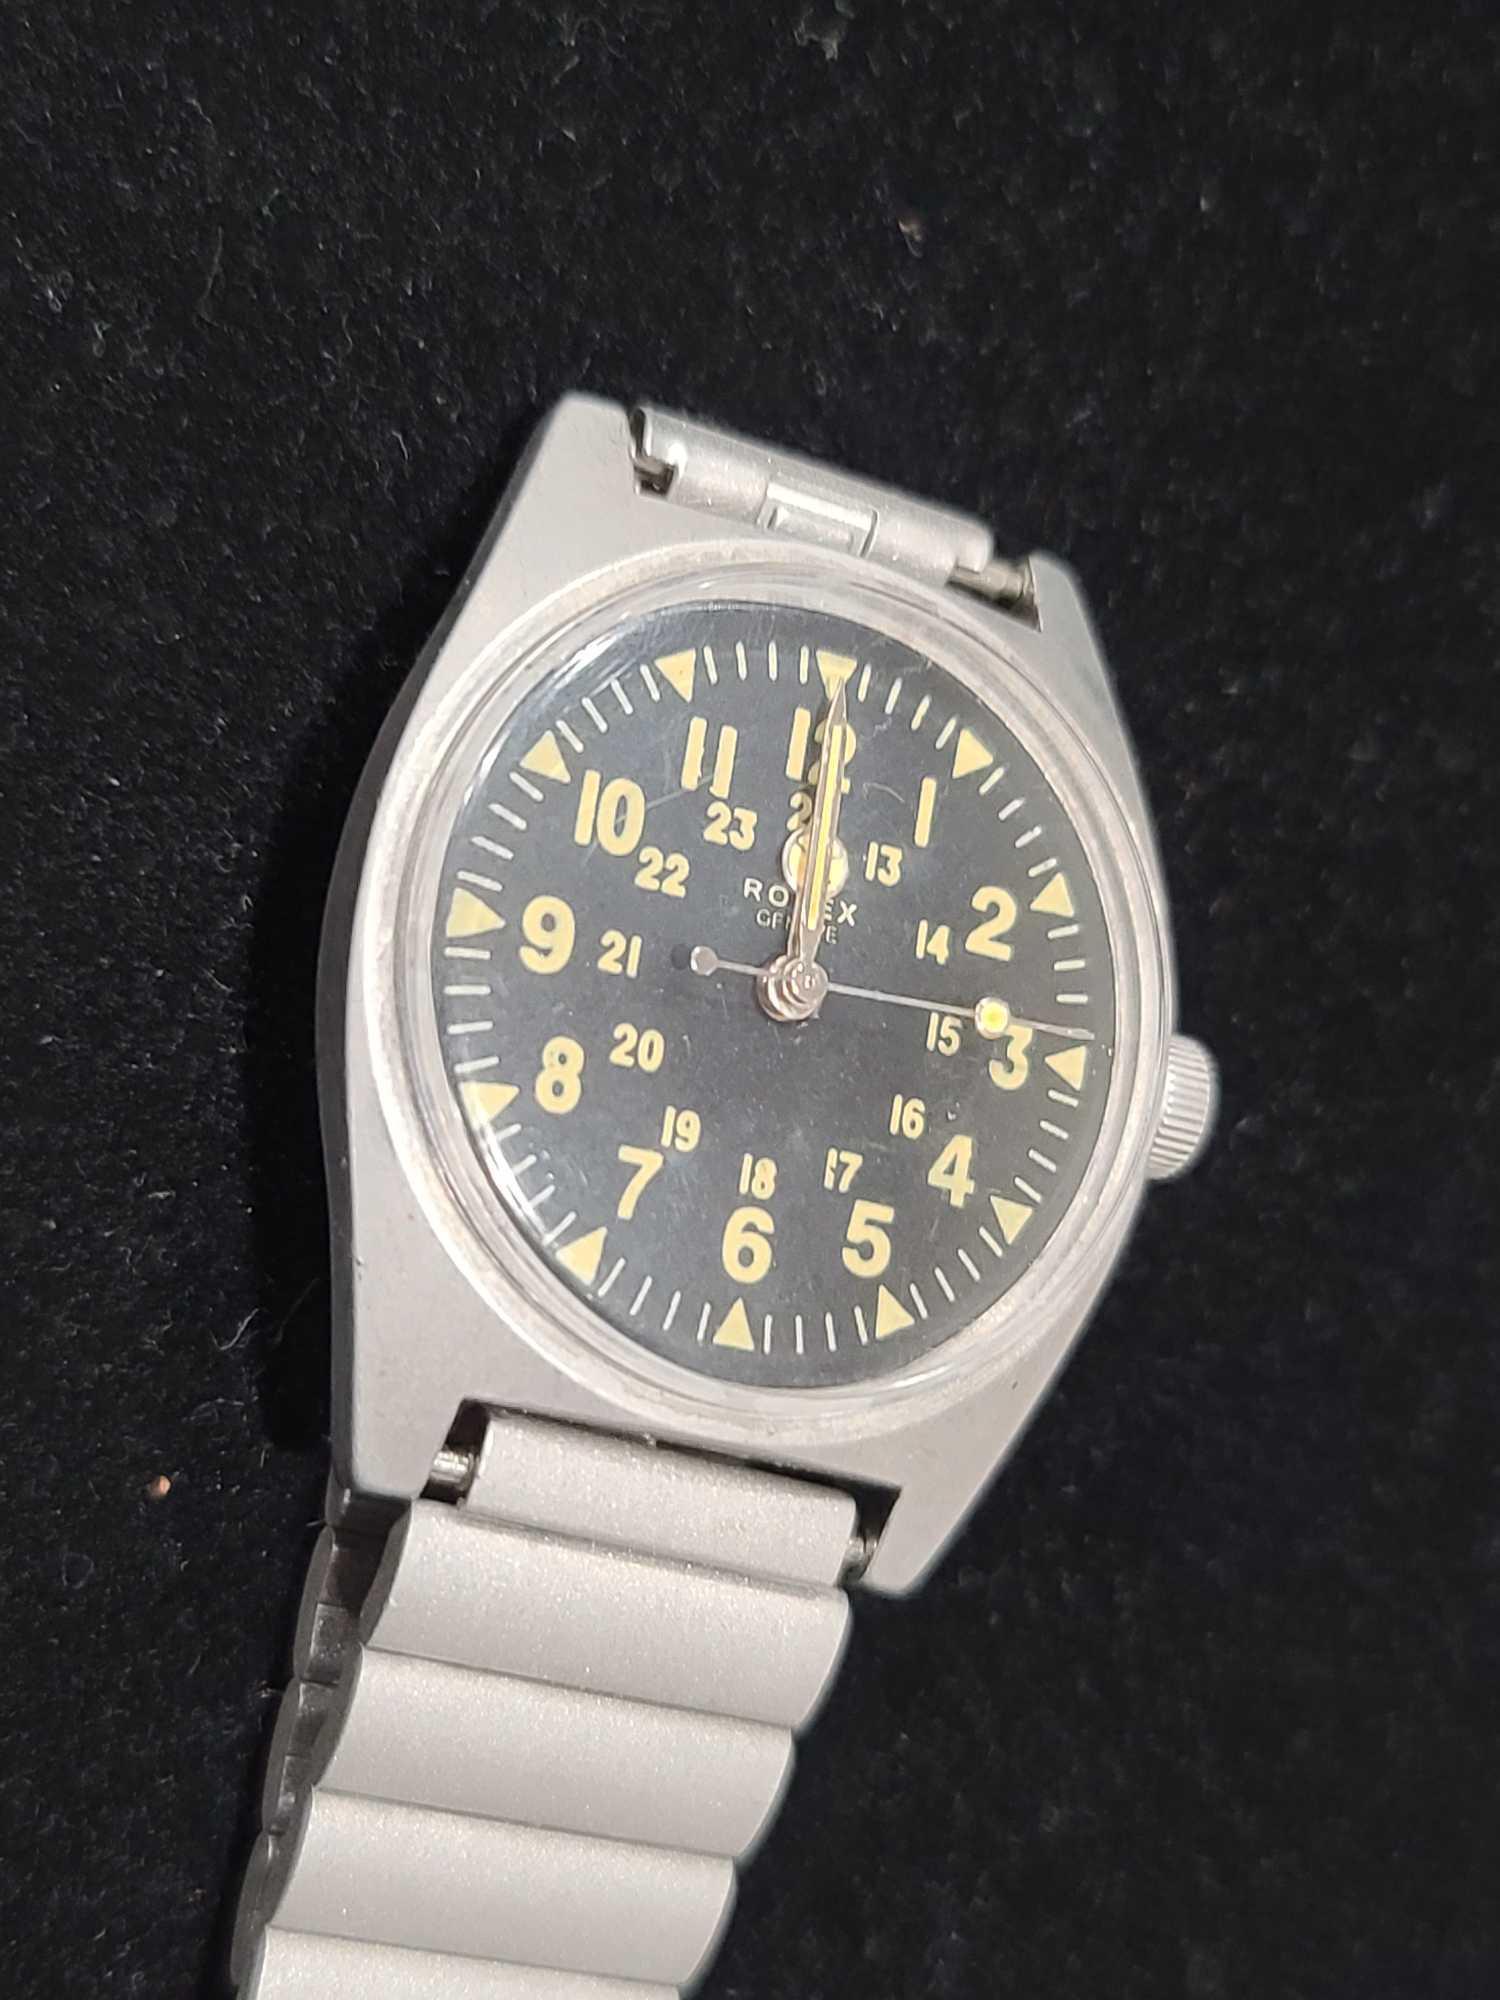 Rare Rolex Vietnam War Pilot's Wristwatch, Black Dial W/ Affidavit Provenance